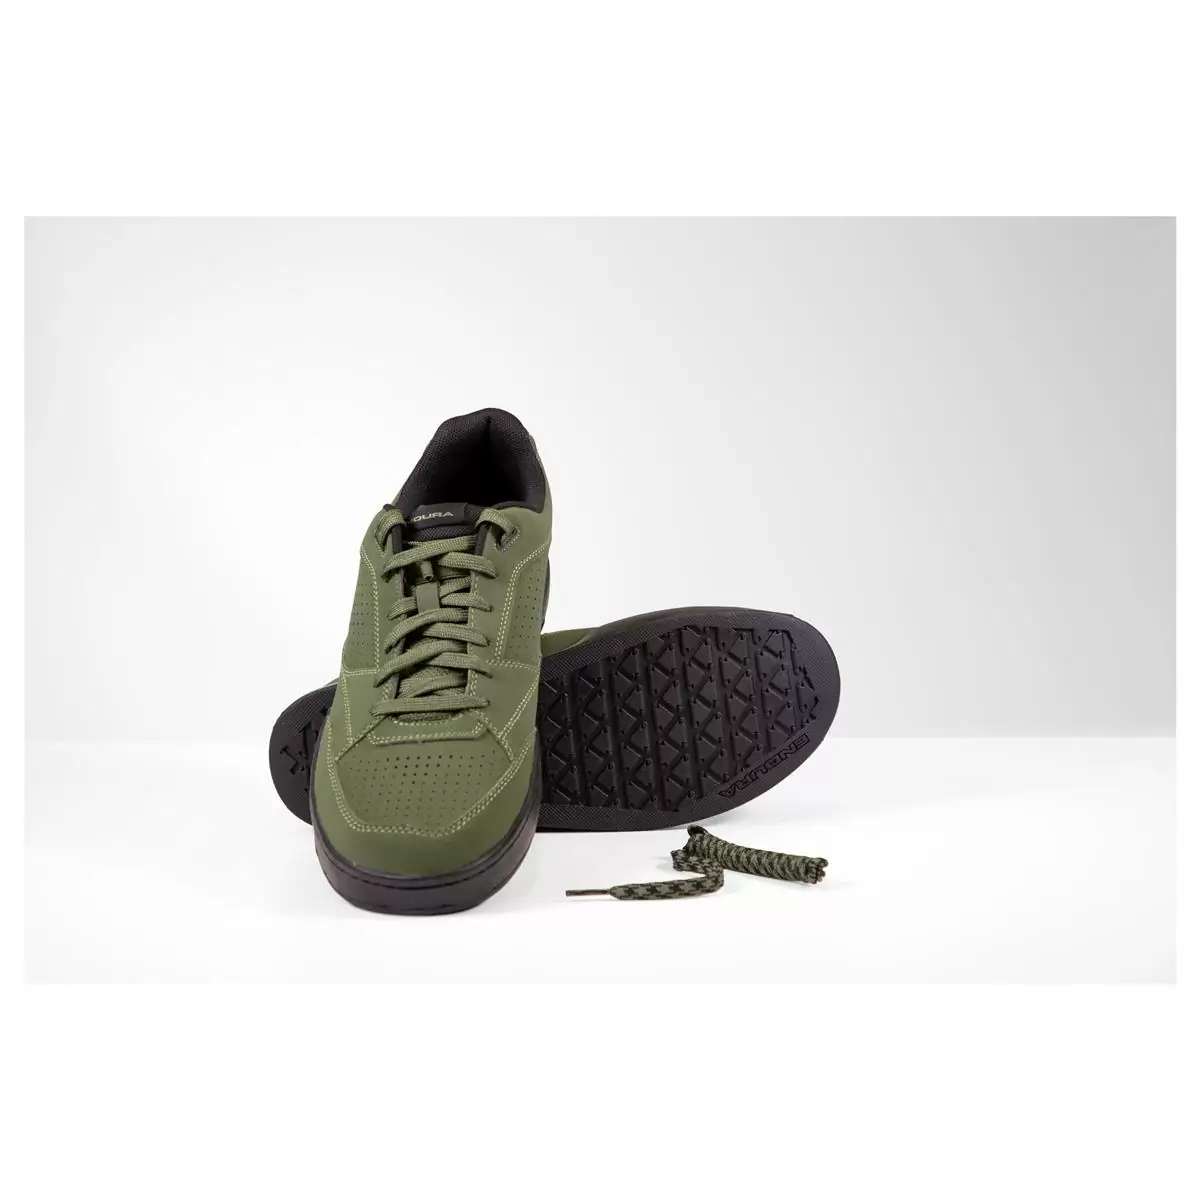 Hummvee Flat Pedal Schuhe Grün Größe 40 #3